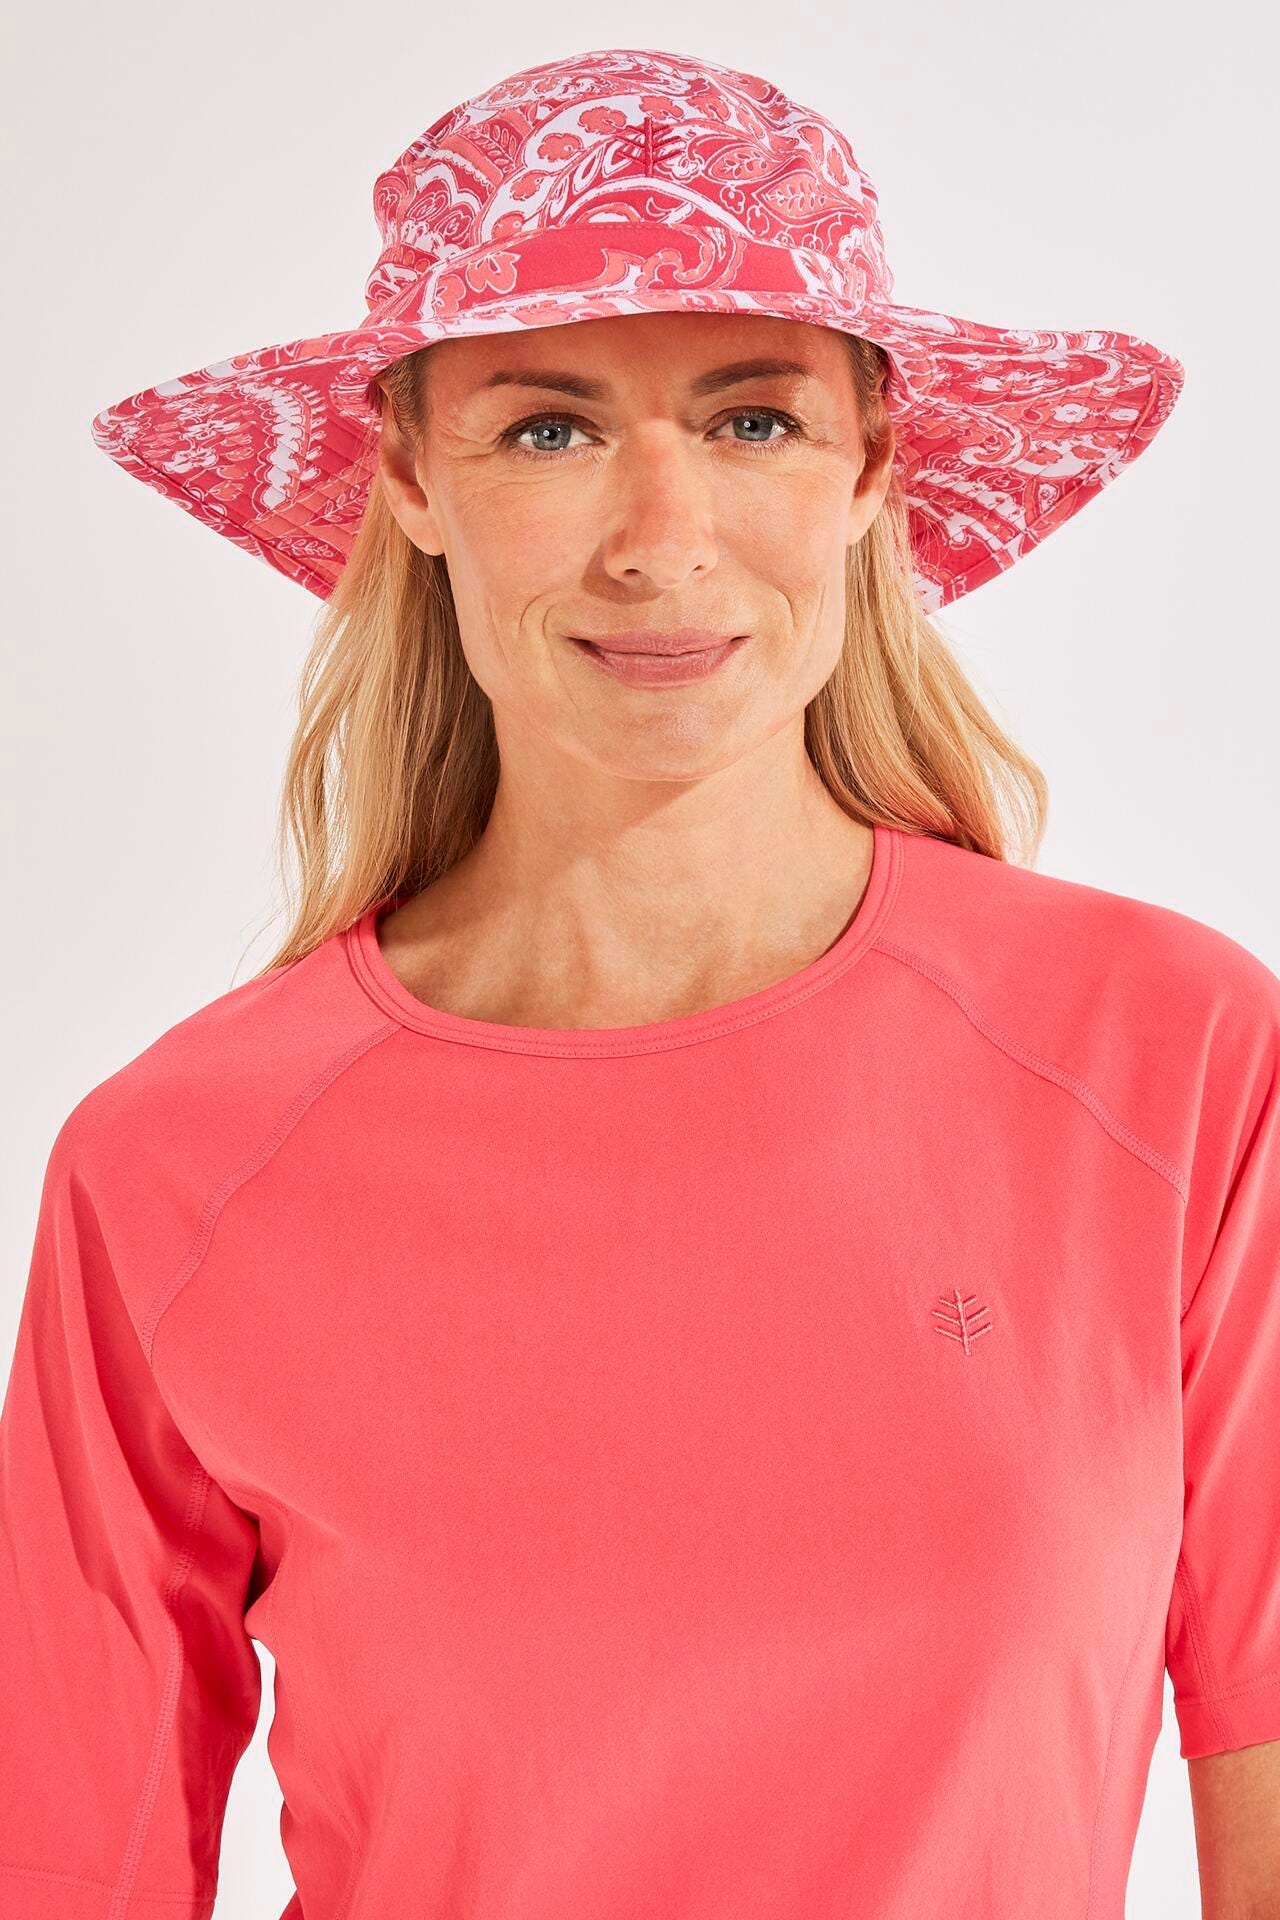 Coolibar Women's Brighton Chlorine Resistant Bucket Hat UPF 50+, Radiant Coral / S/M